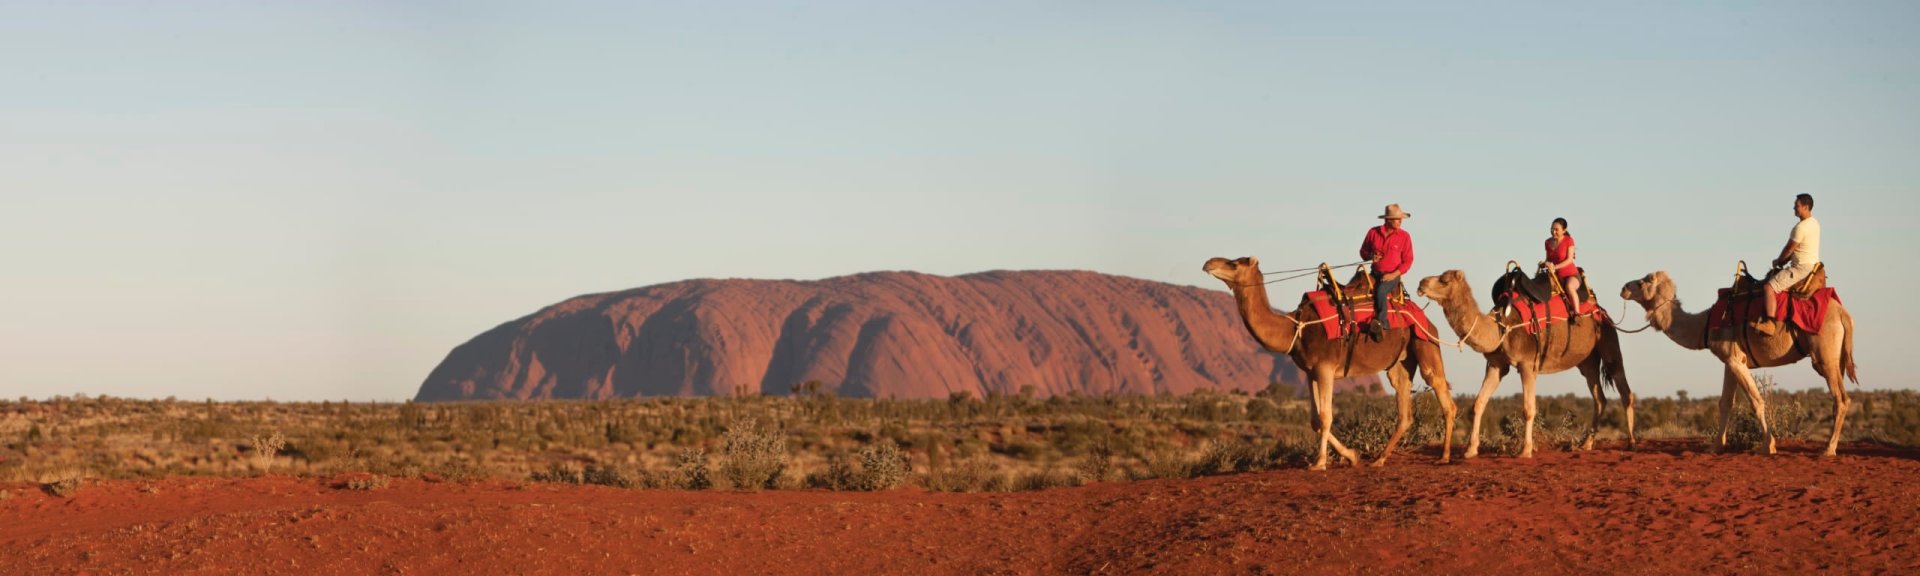 Uluru camel tour. Photo: Tourism NT